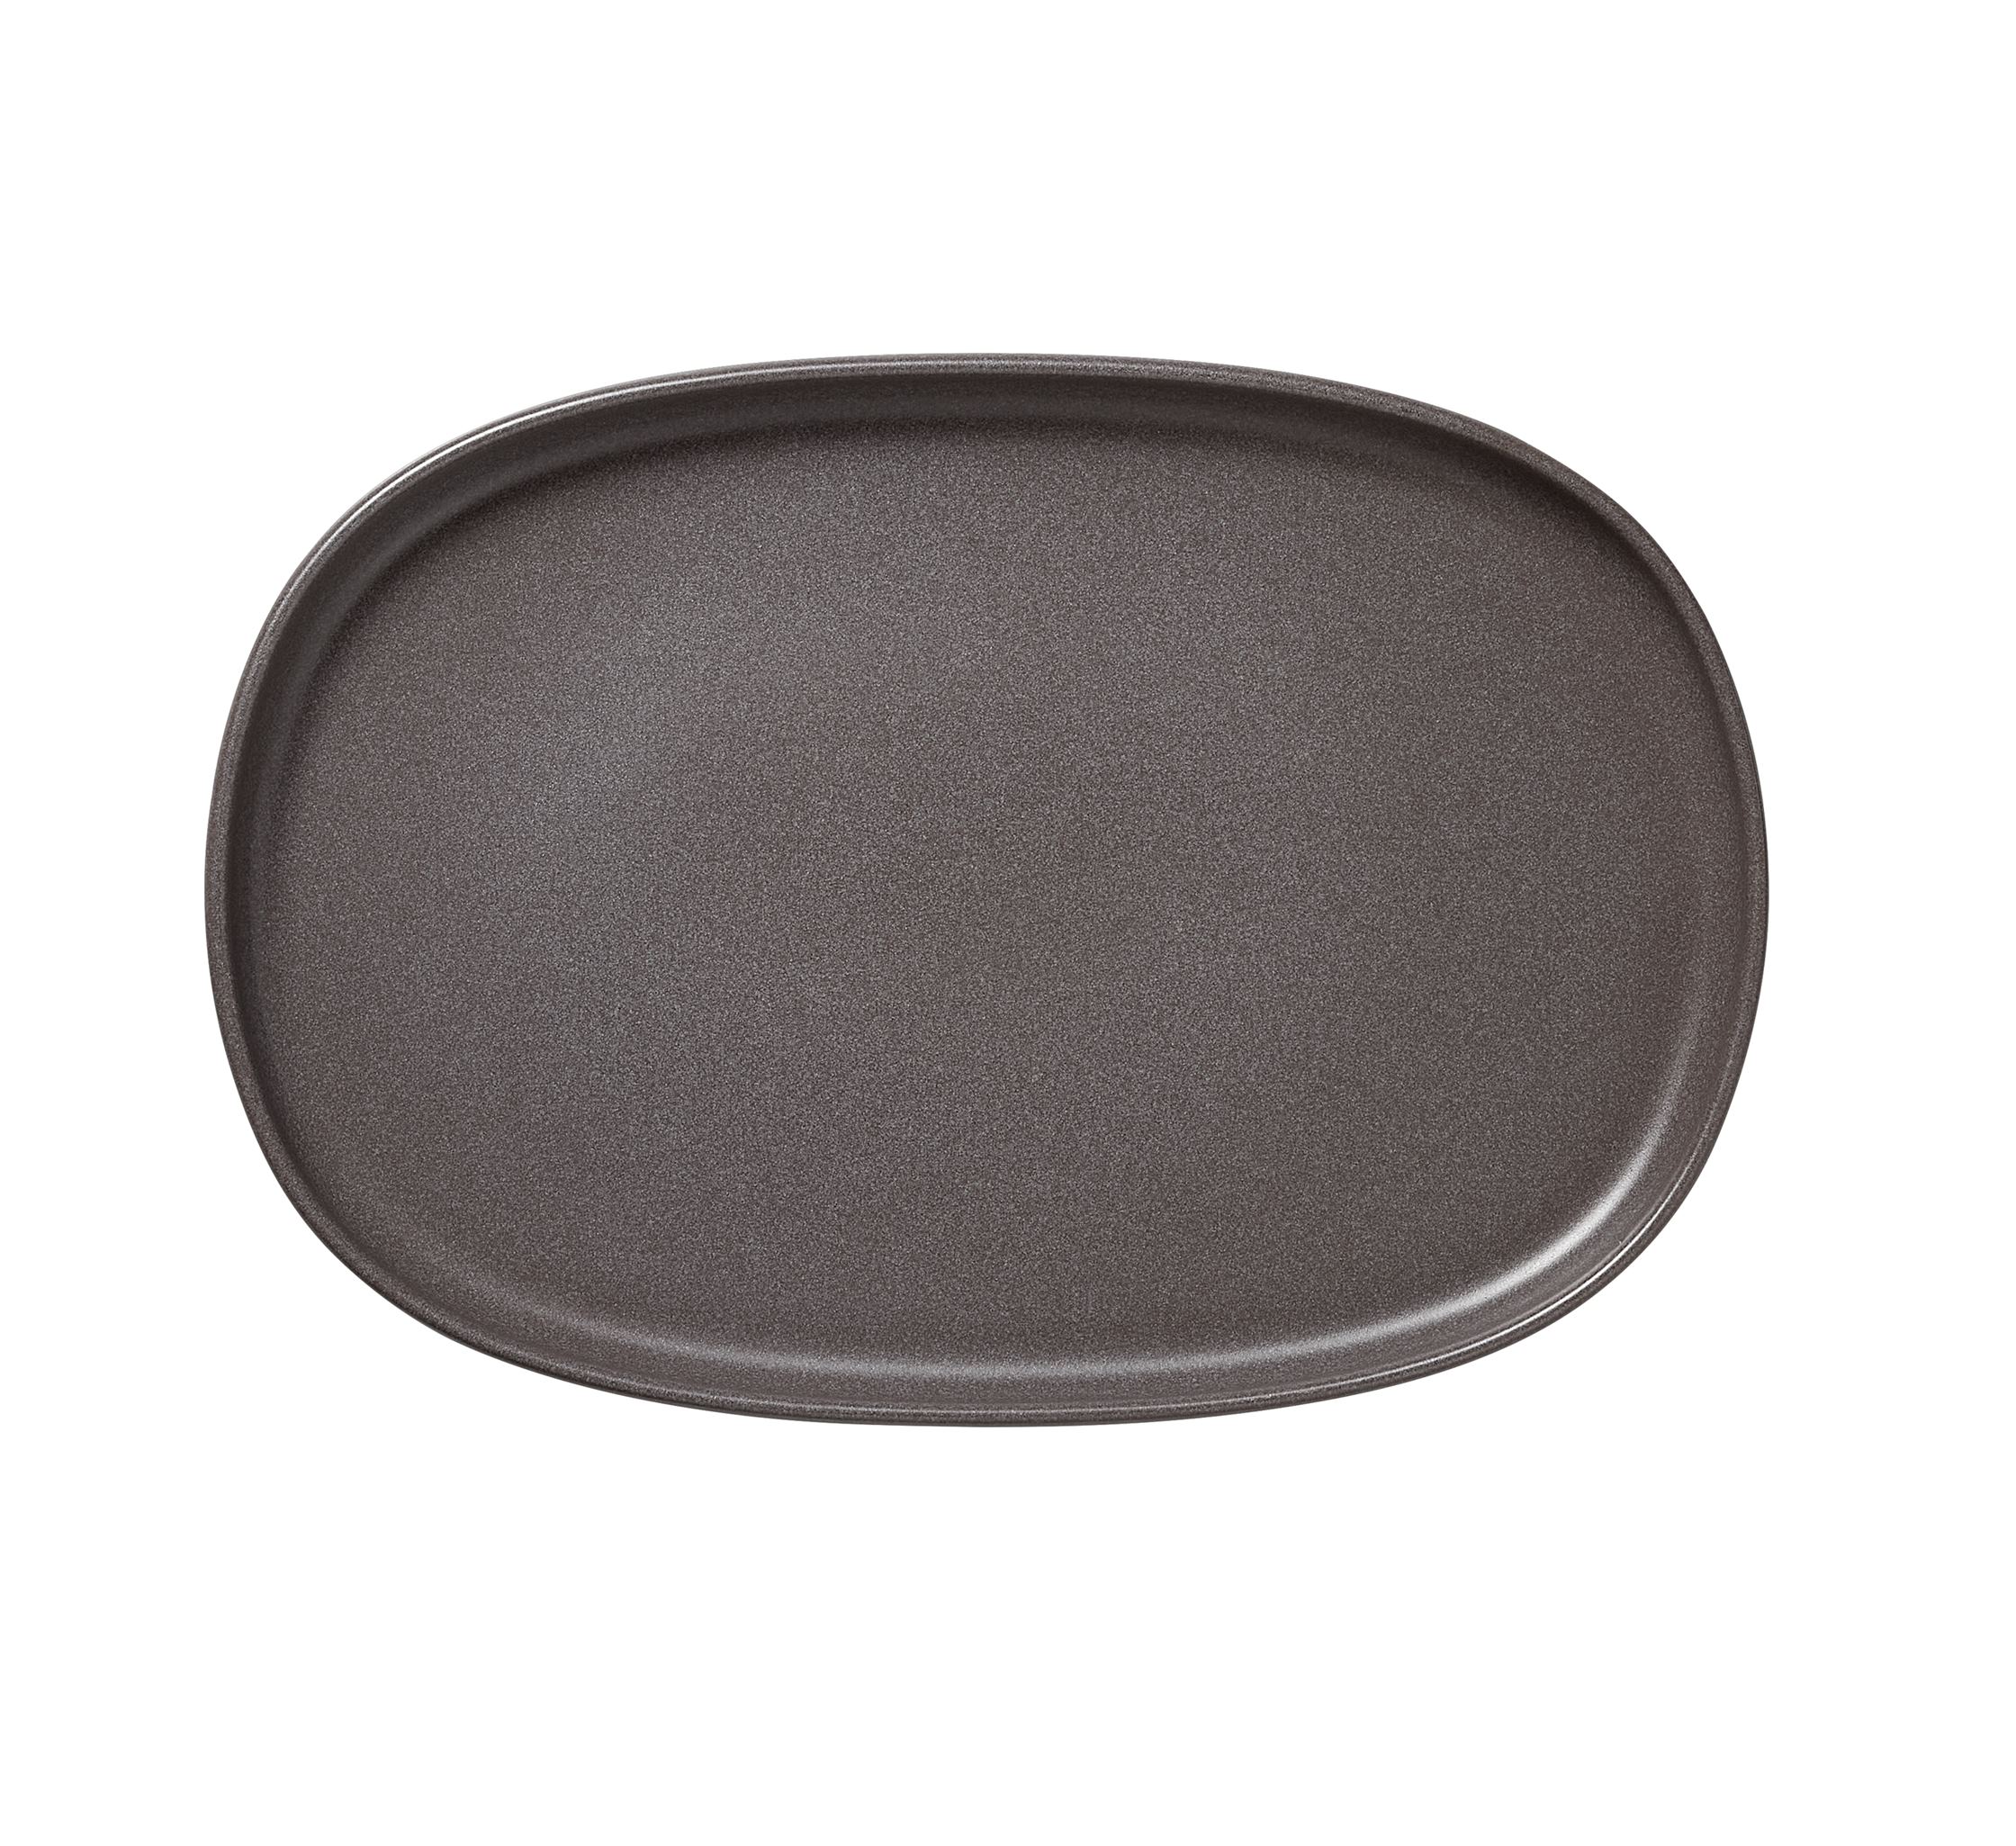 ROCKZZERO® Platte, 33 x 23 cm, Set á 4 Stück, stone gray, Steinzeug